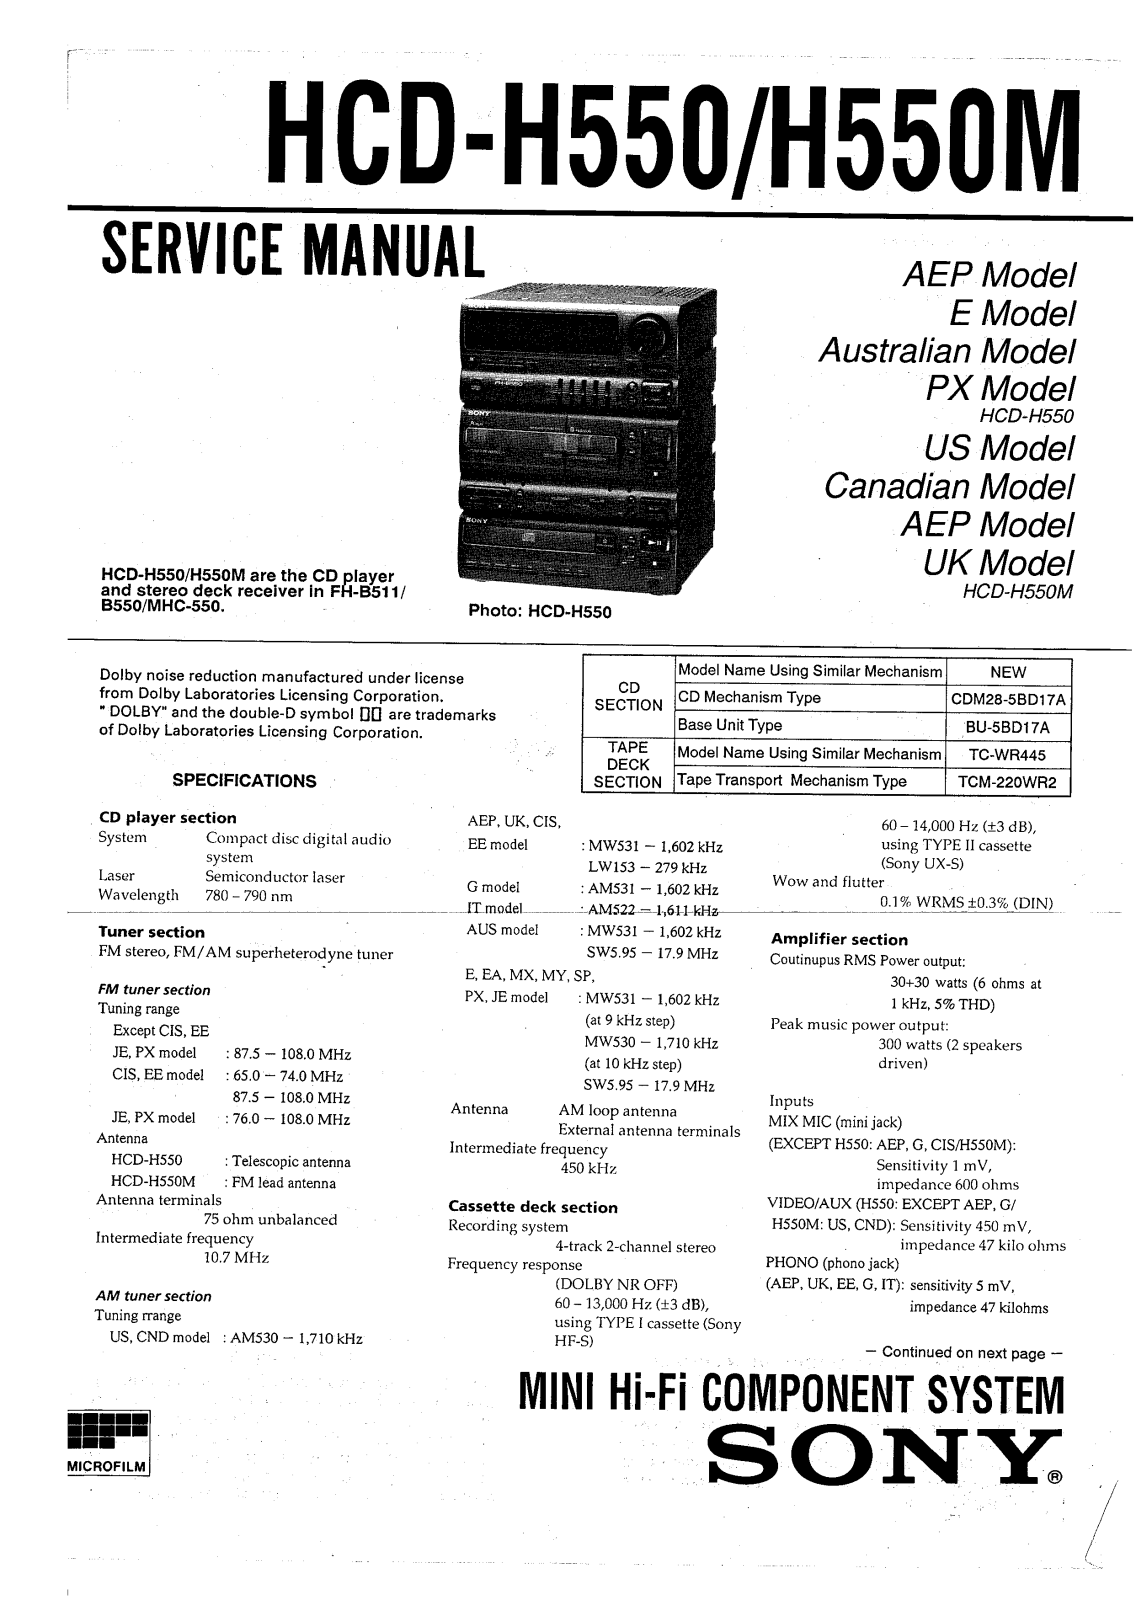 Sony HCDH-550, HCDH-550-M Service manual